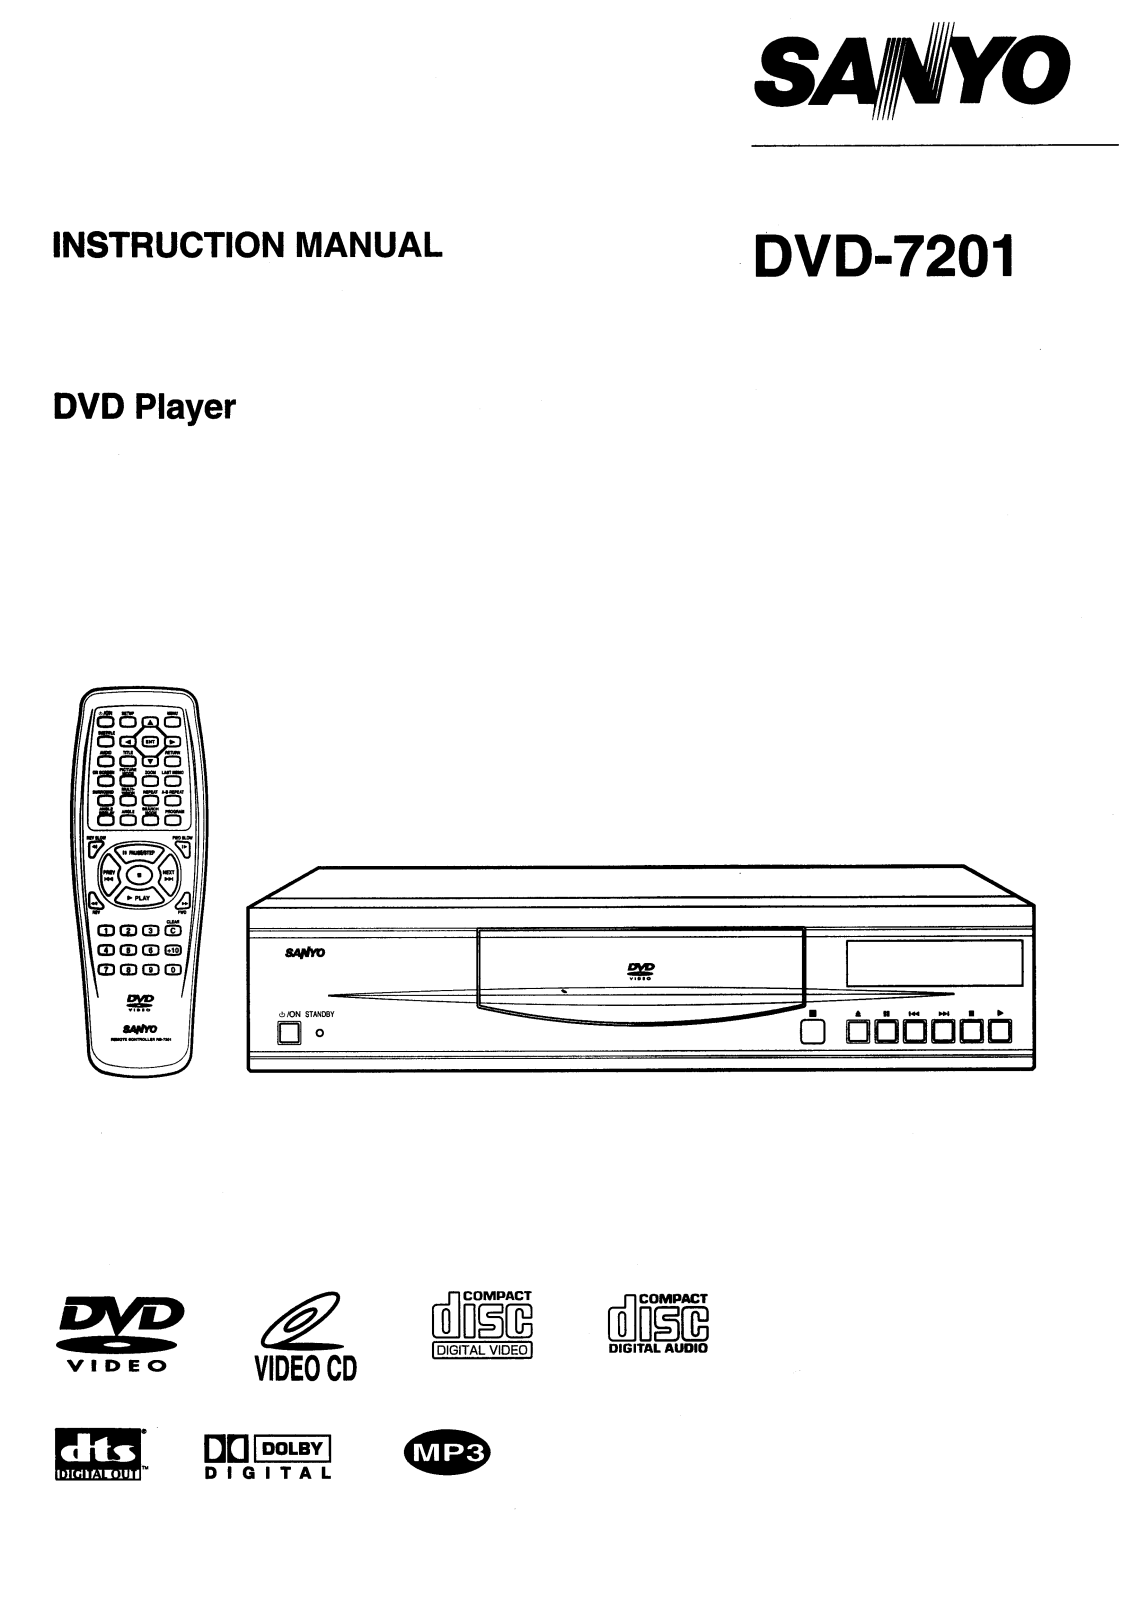 Sanyo DVD-7201 Instruction Manual